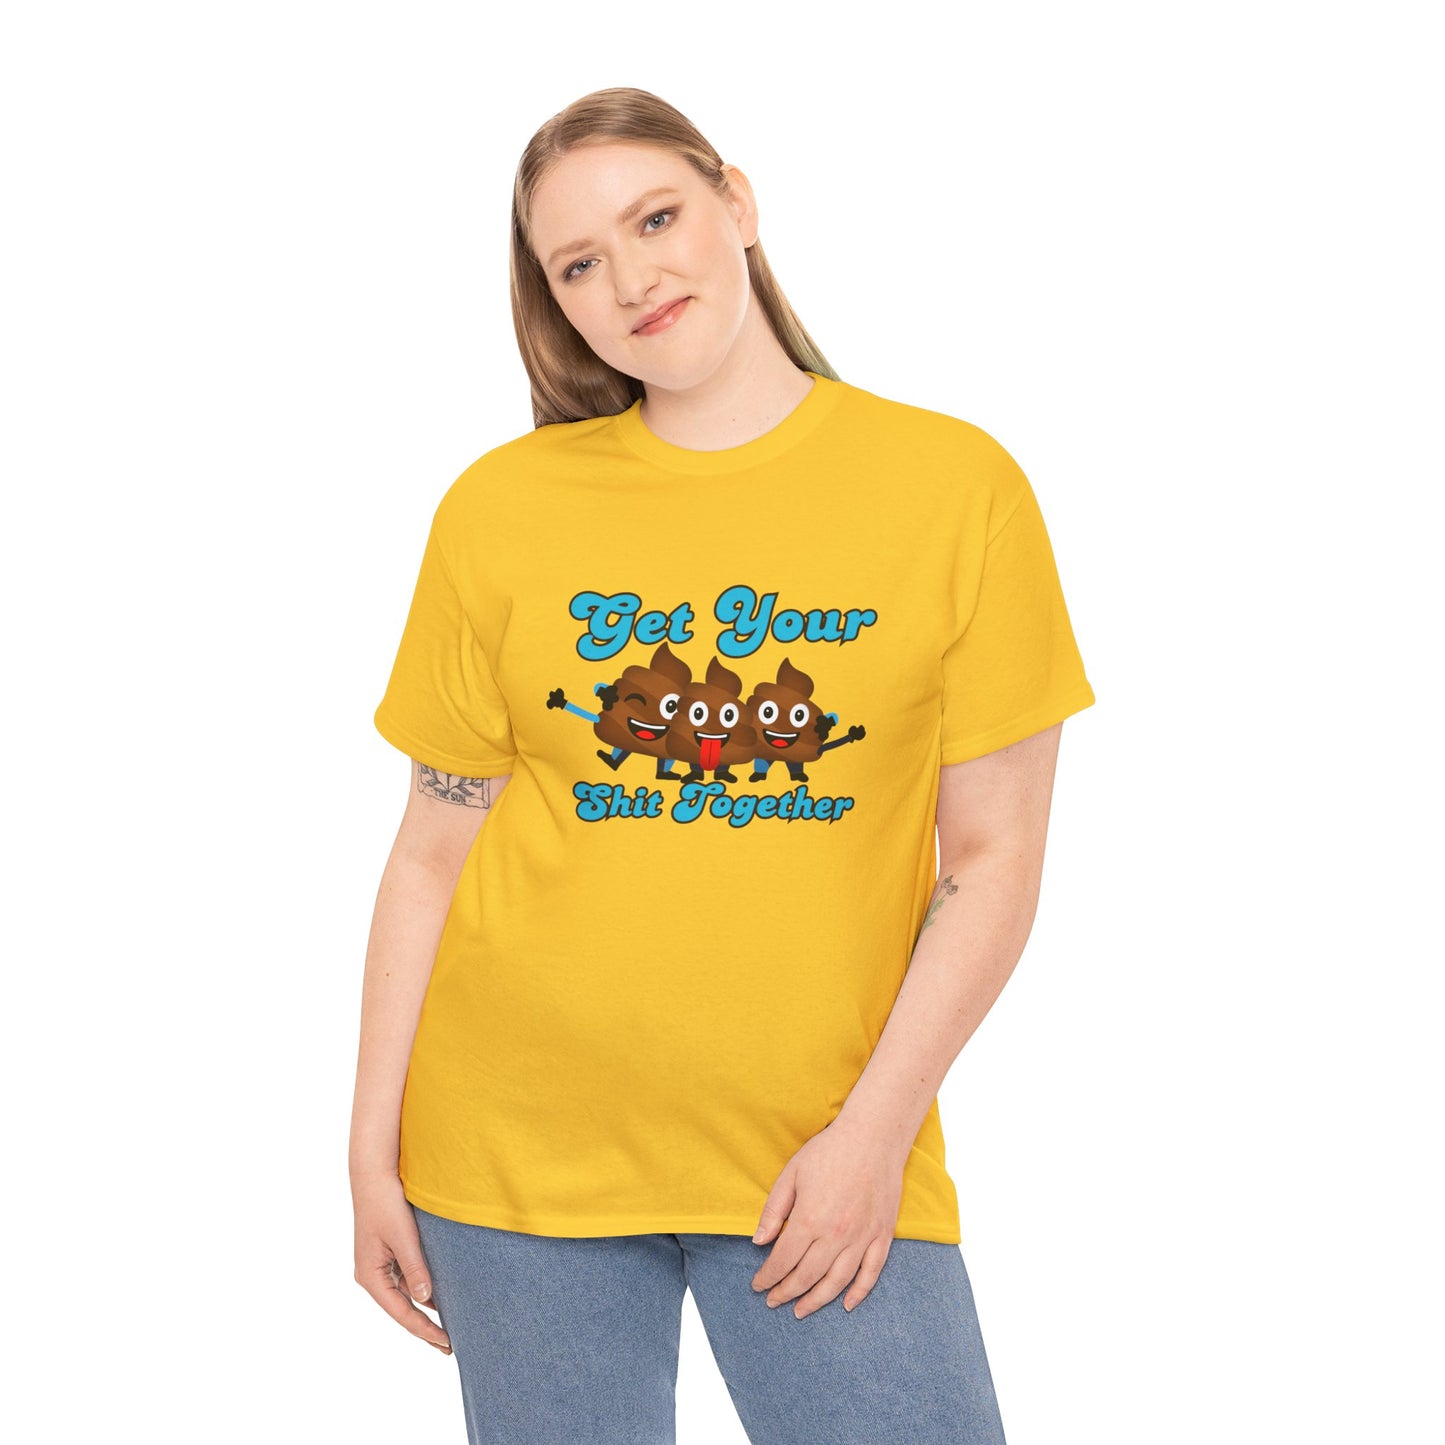 Get Your Shit Together T-Shirt, Funny Poop Emojis, play on Words, Humorous poop humor, Dad shirts, Pun t-shirt, Hilarious Poo tee Shirt